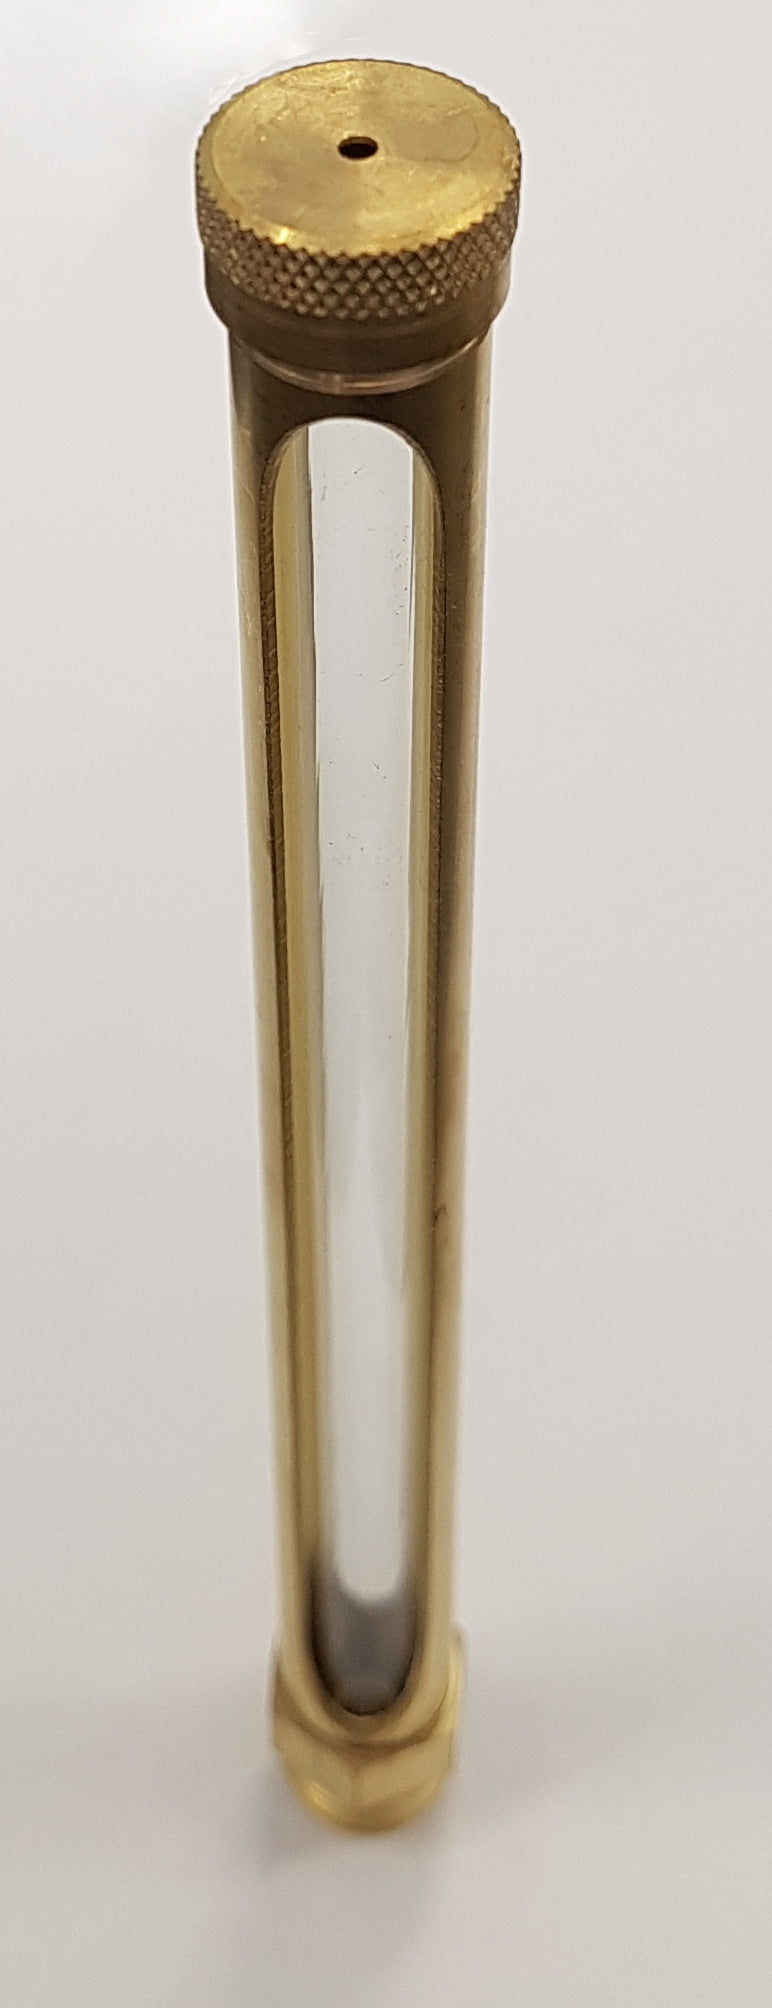 Brass straight oil position indicator type 226 - 80 x 3/8 BSP